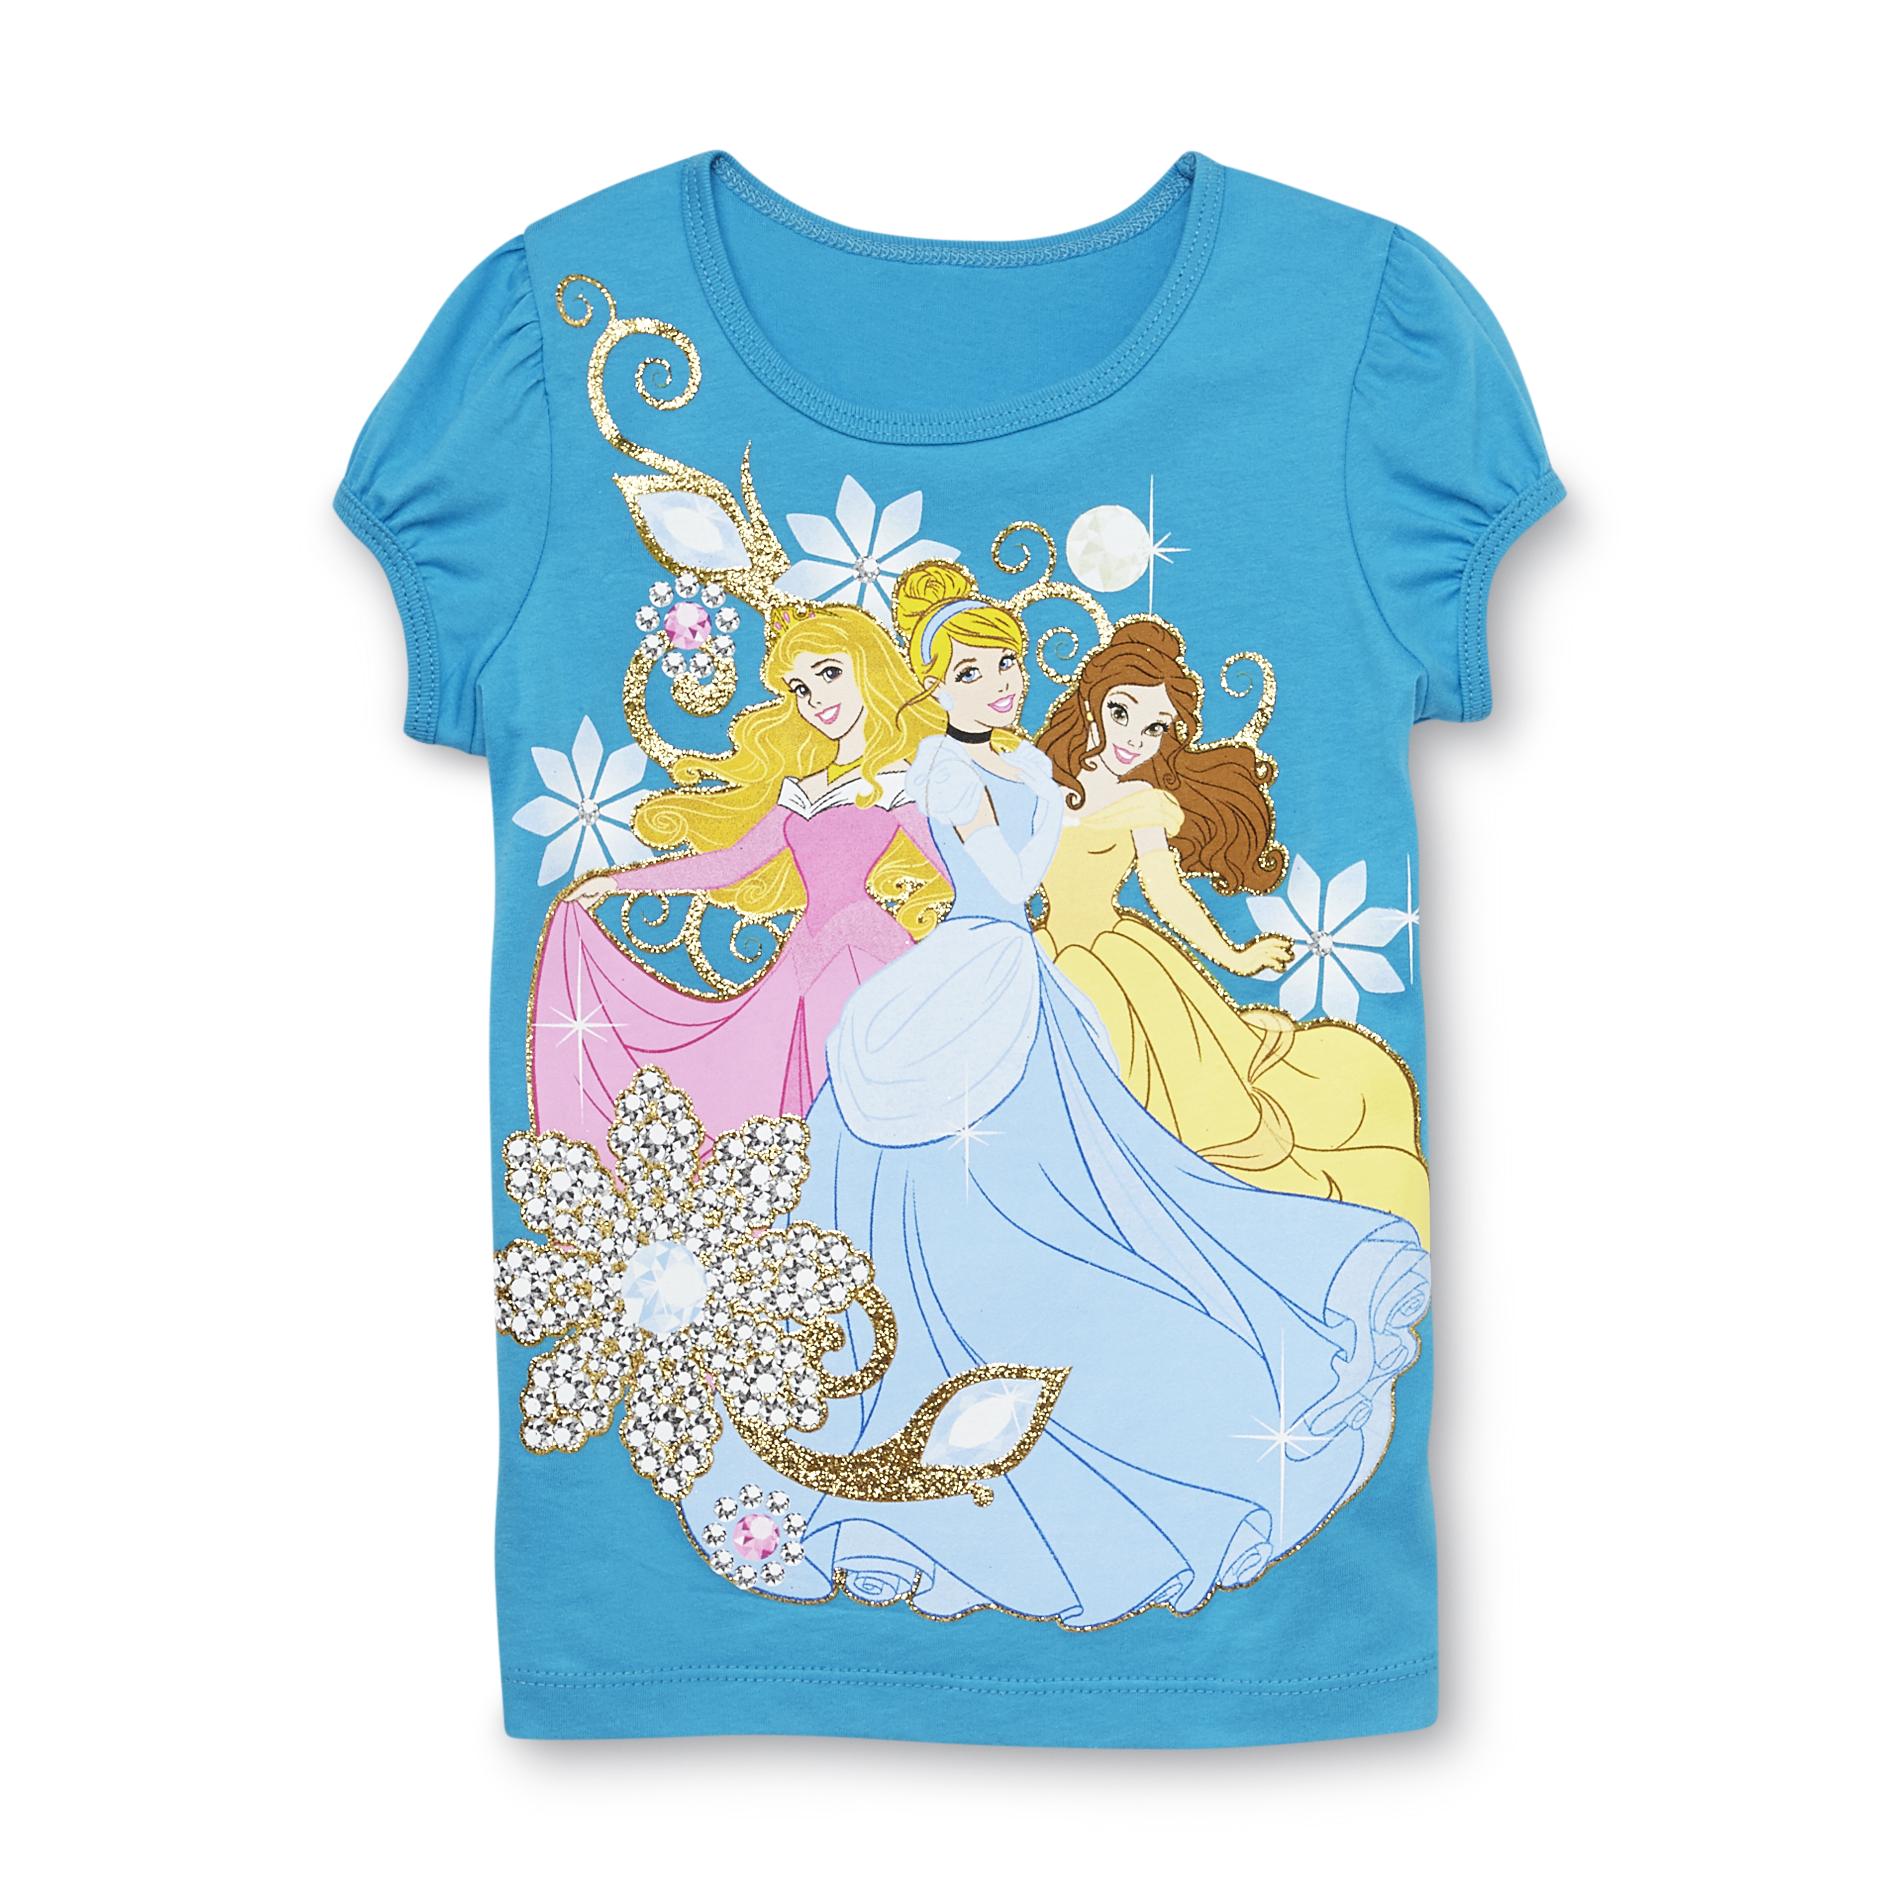 Disney Princesses Girl's Cap Sleeve Top - Glitter